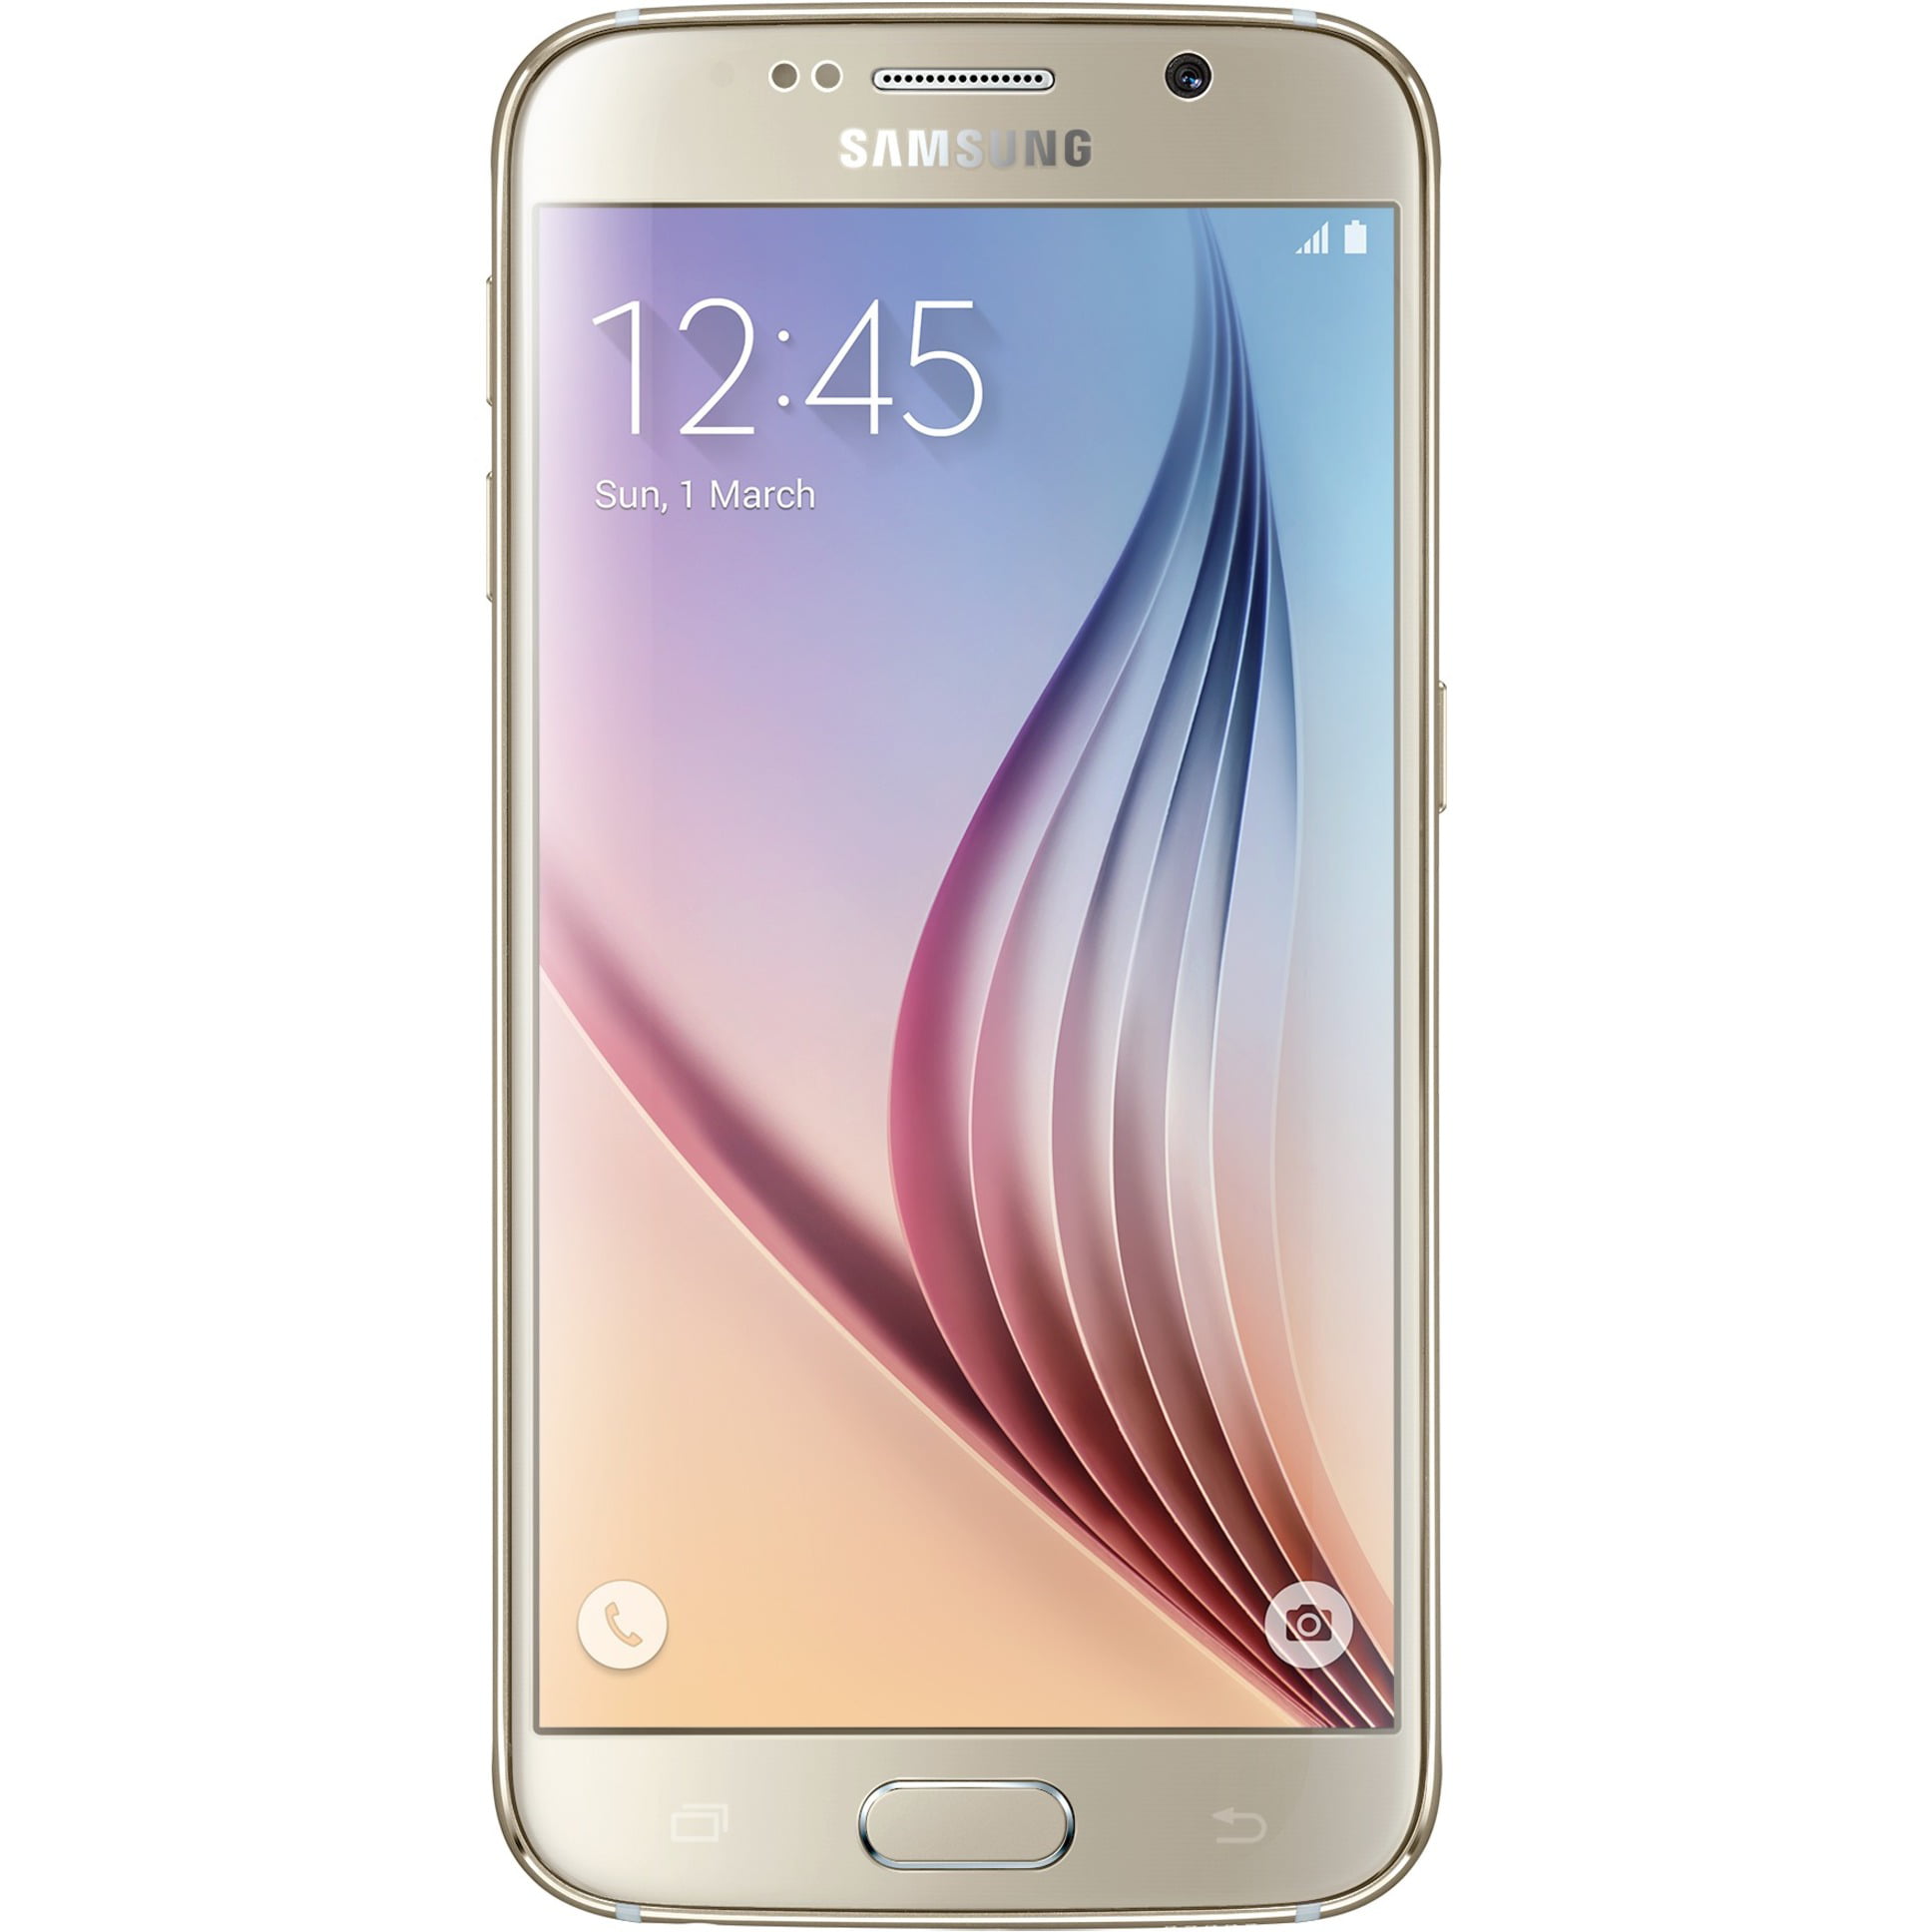 Huis thee Verfijnen Samsung Galaxy S6 SM-G920F 32 GB Smartphone, 5.1" Super AMOLED QHD 2560 x  1440, 3 GB RAM, Android 5.0.2 Lollipop, 4G, Gold - Walmart.com